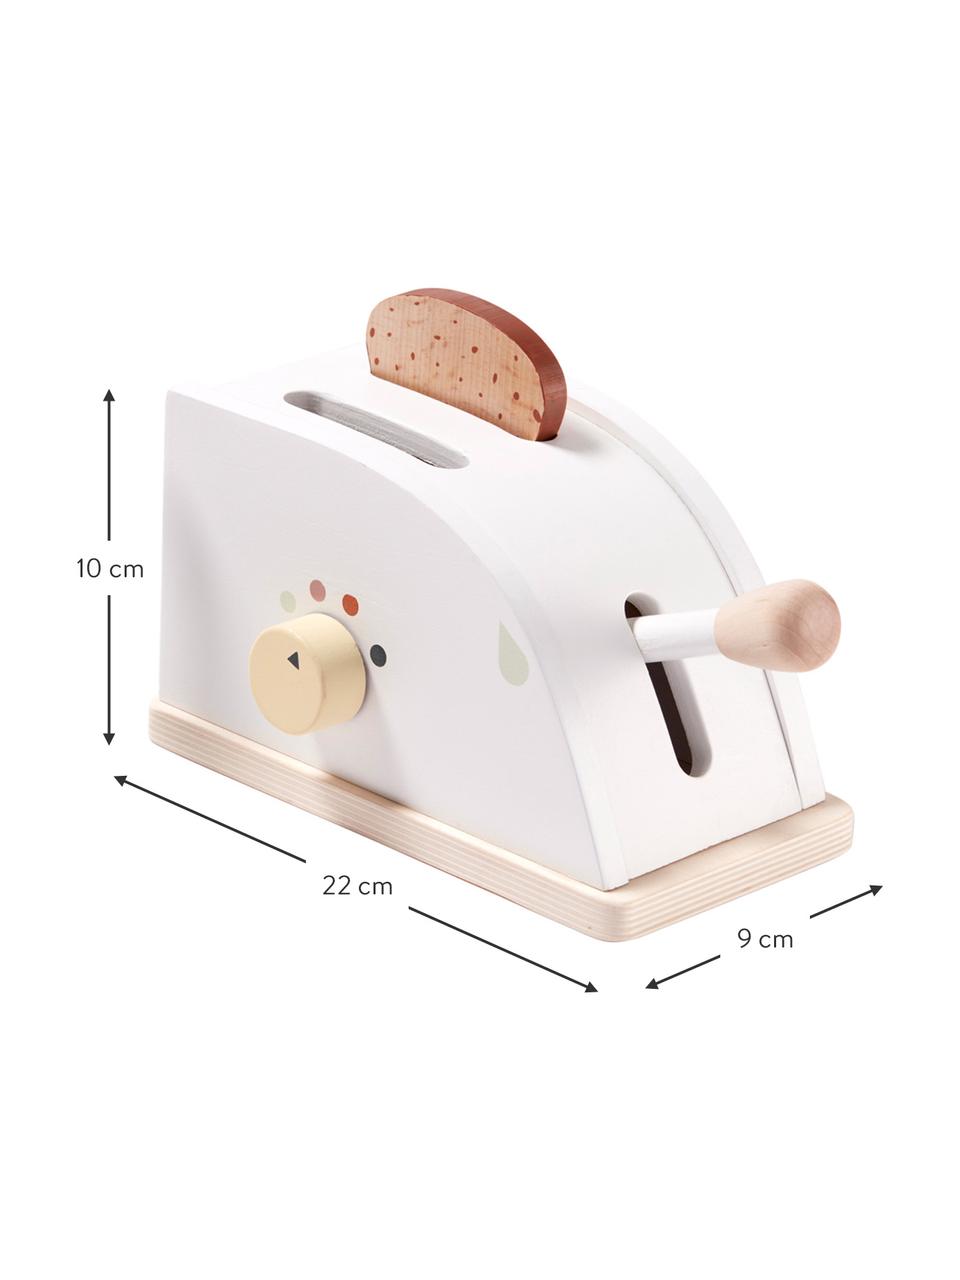 Spielzeug-Set Toaster, Holz, Mehrfarbig, B 10 x H 22 cm